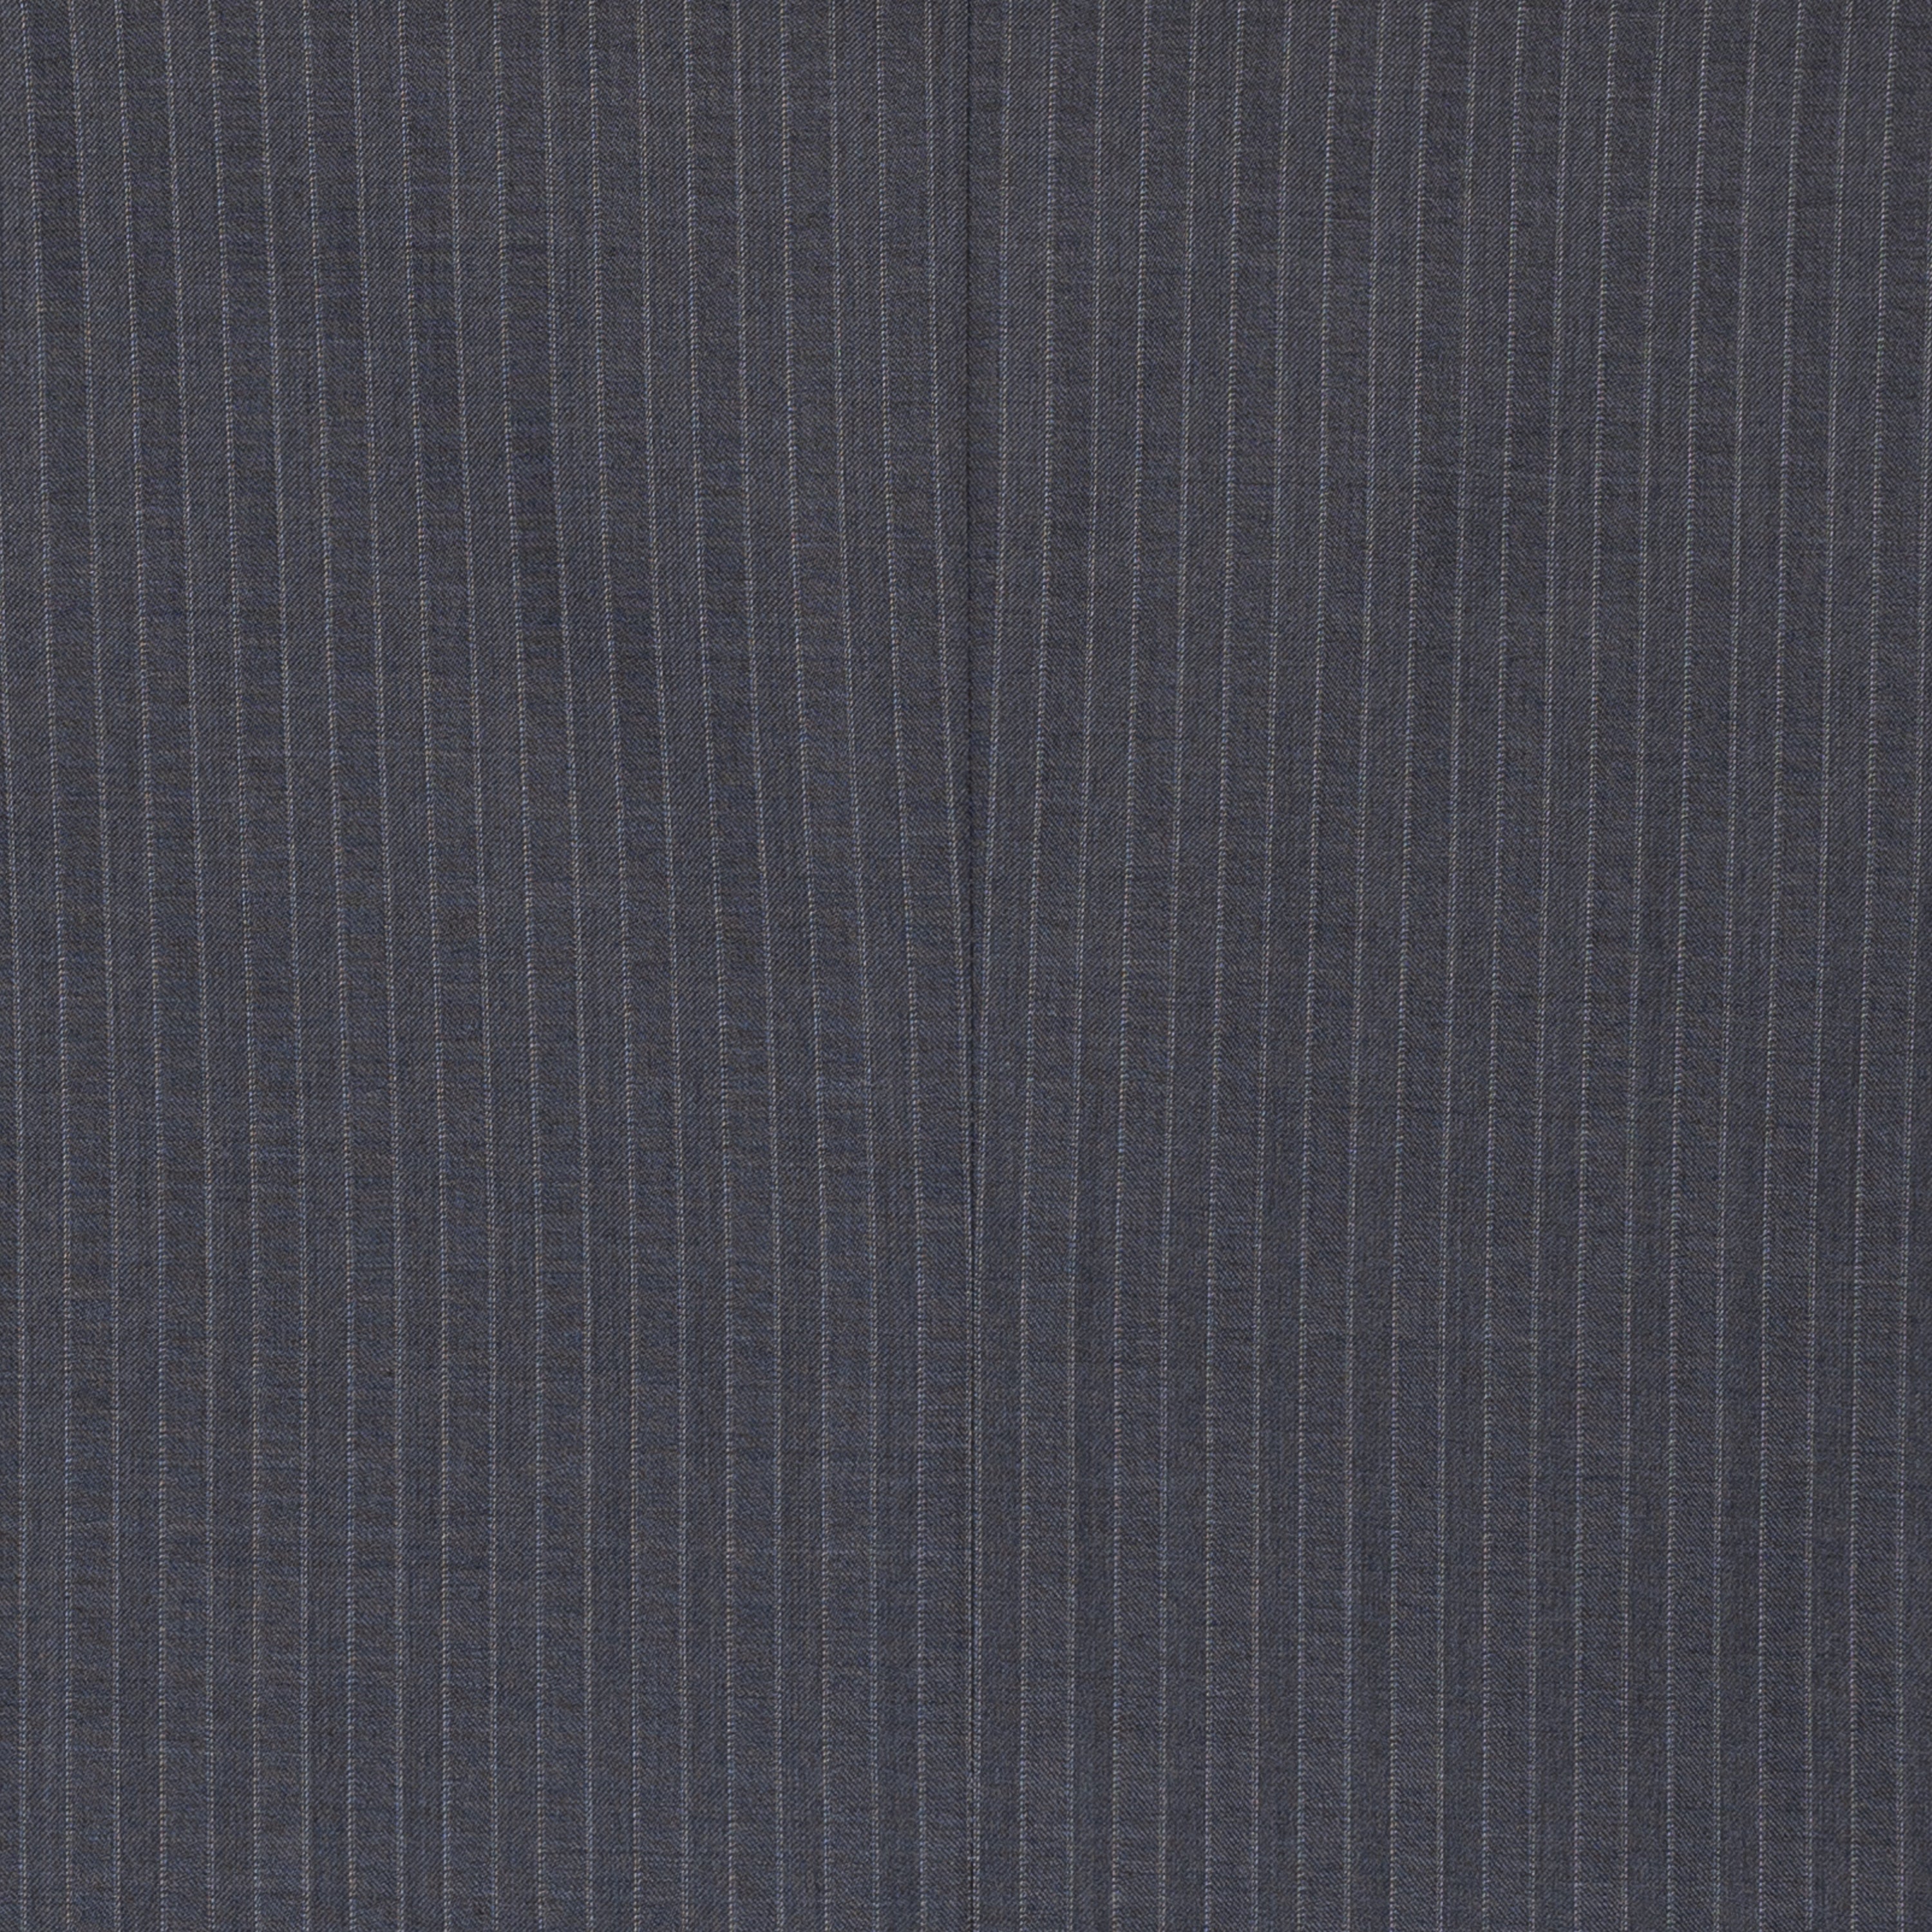 Sartoria CASTANGIA 1850 Gray Striped Wool Super 140's Suit EU 50 NEW US 40